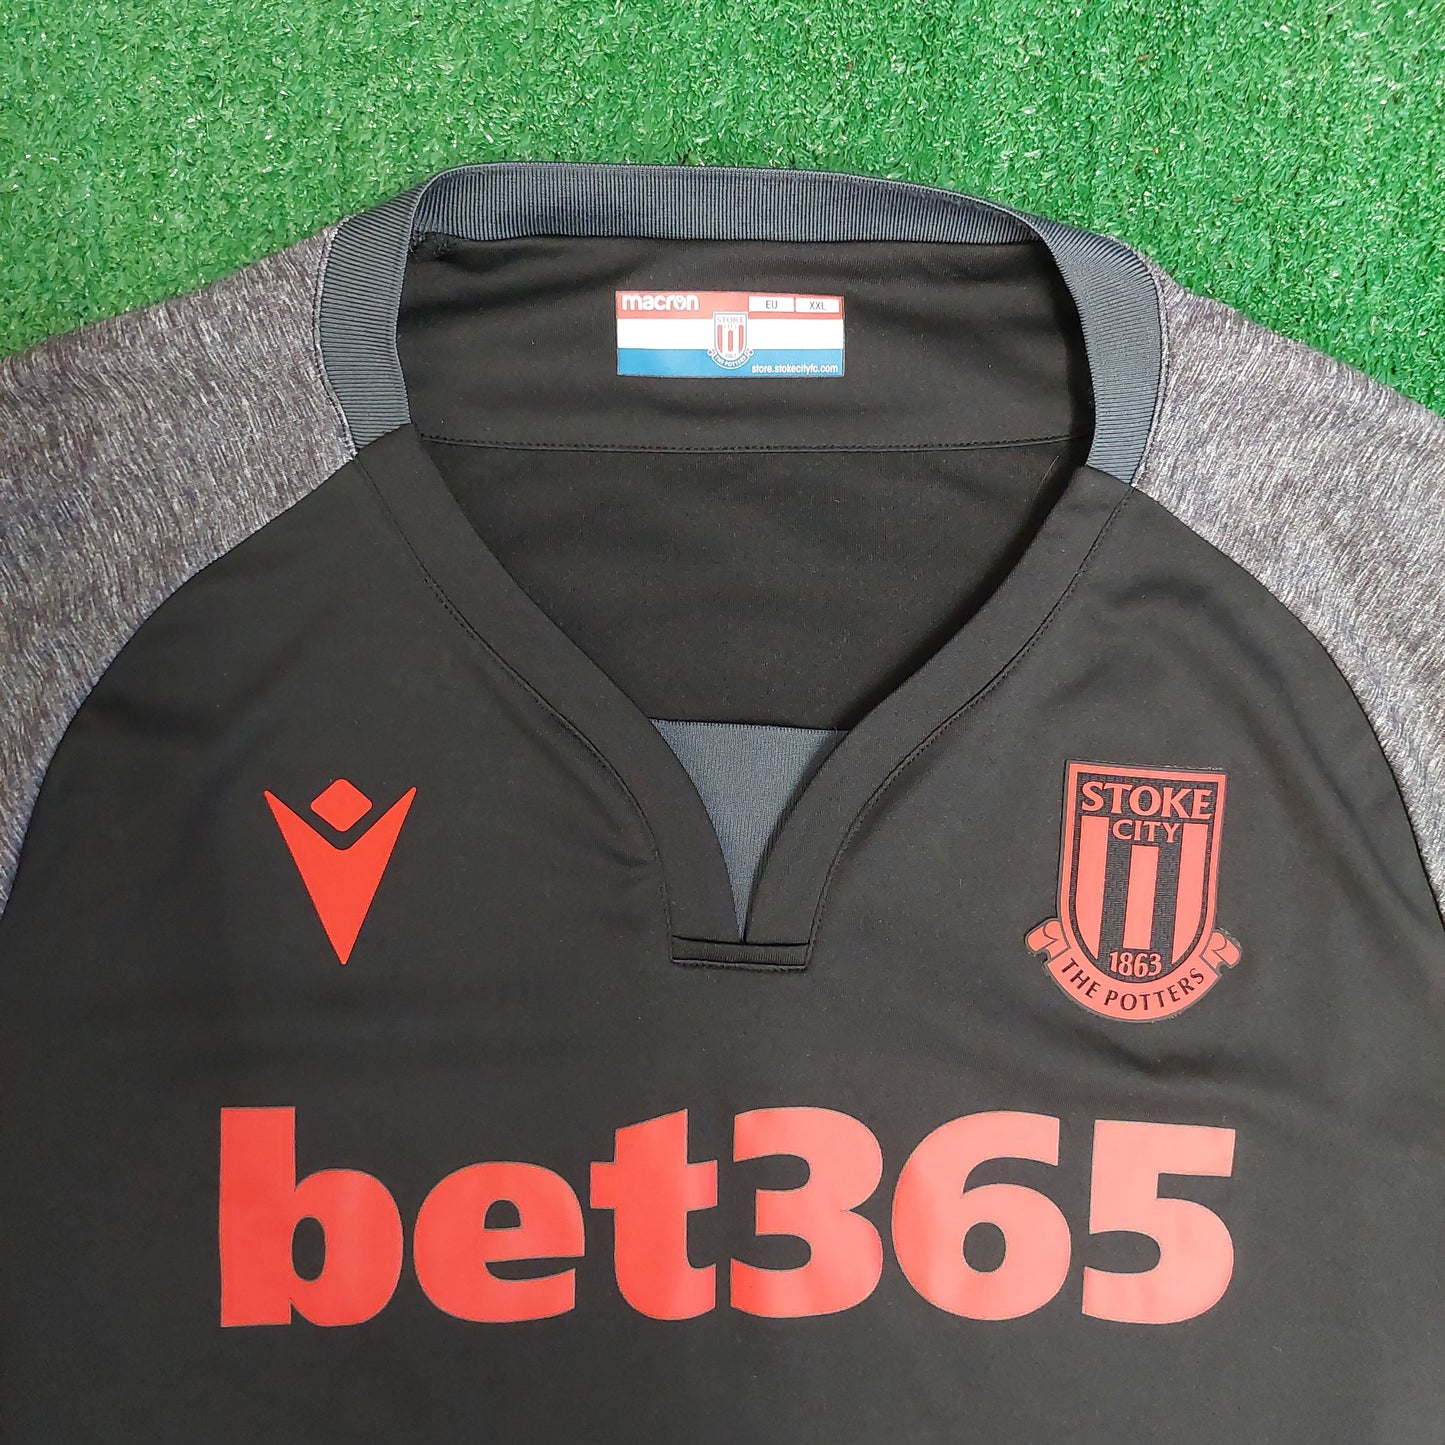 Stoke City 2019/20 Away Shirt (Excellent) - Size XXL